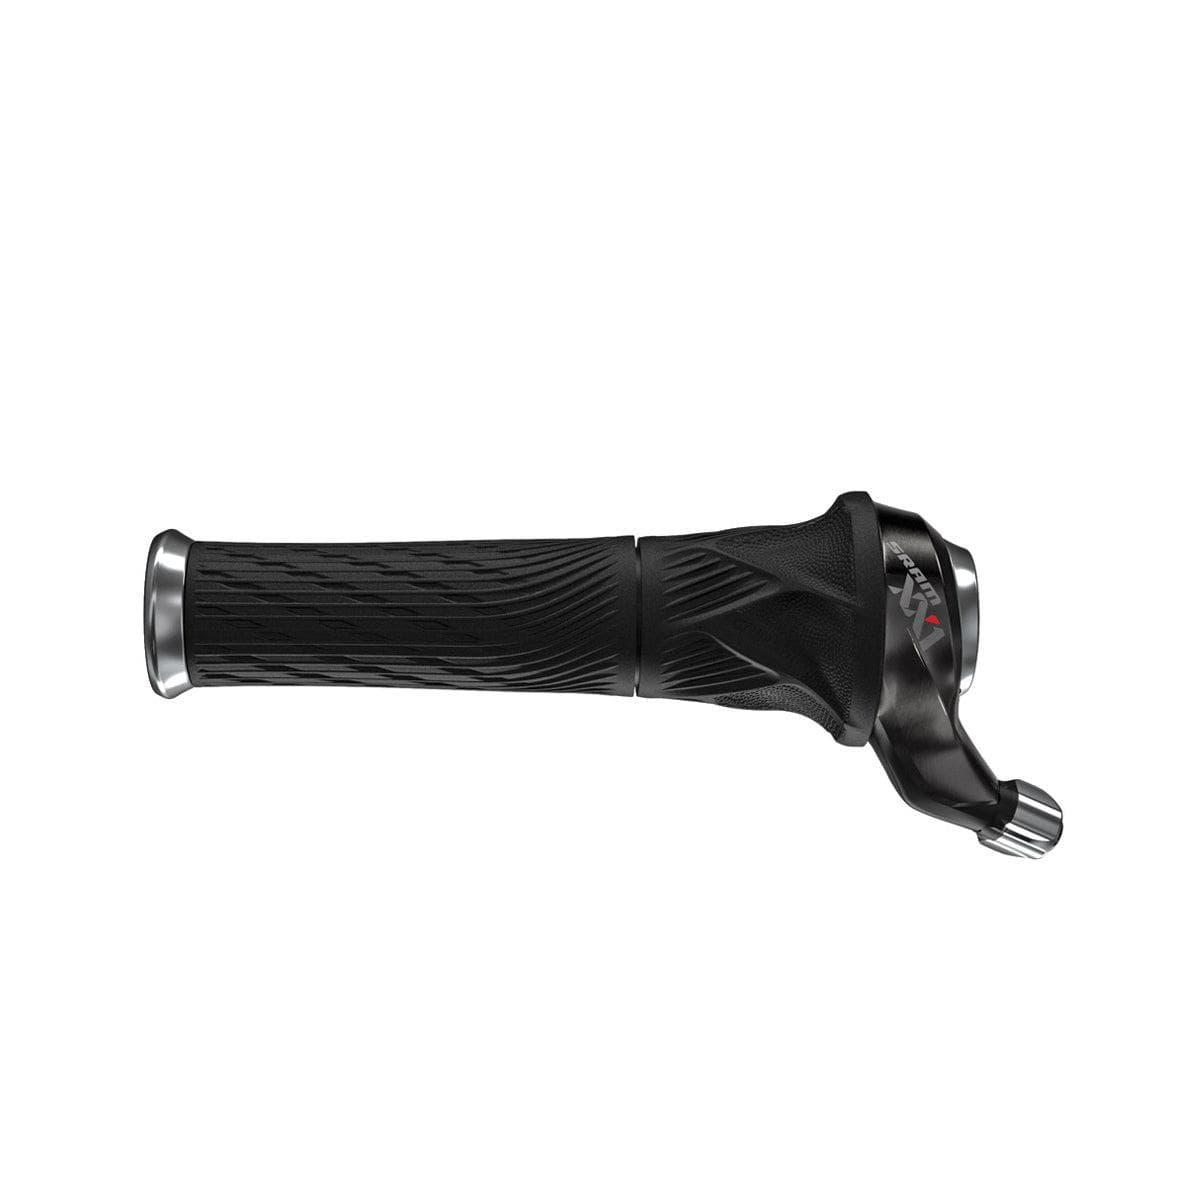 Sram Xx1 Shifter - Grip Shift - 11 Speed Rear Red Inc. Lock-On Grip:  11 Speed